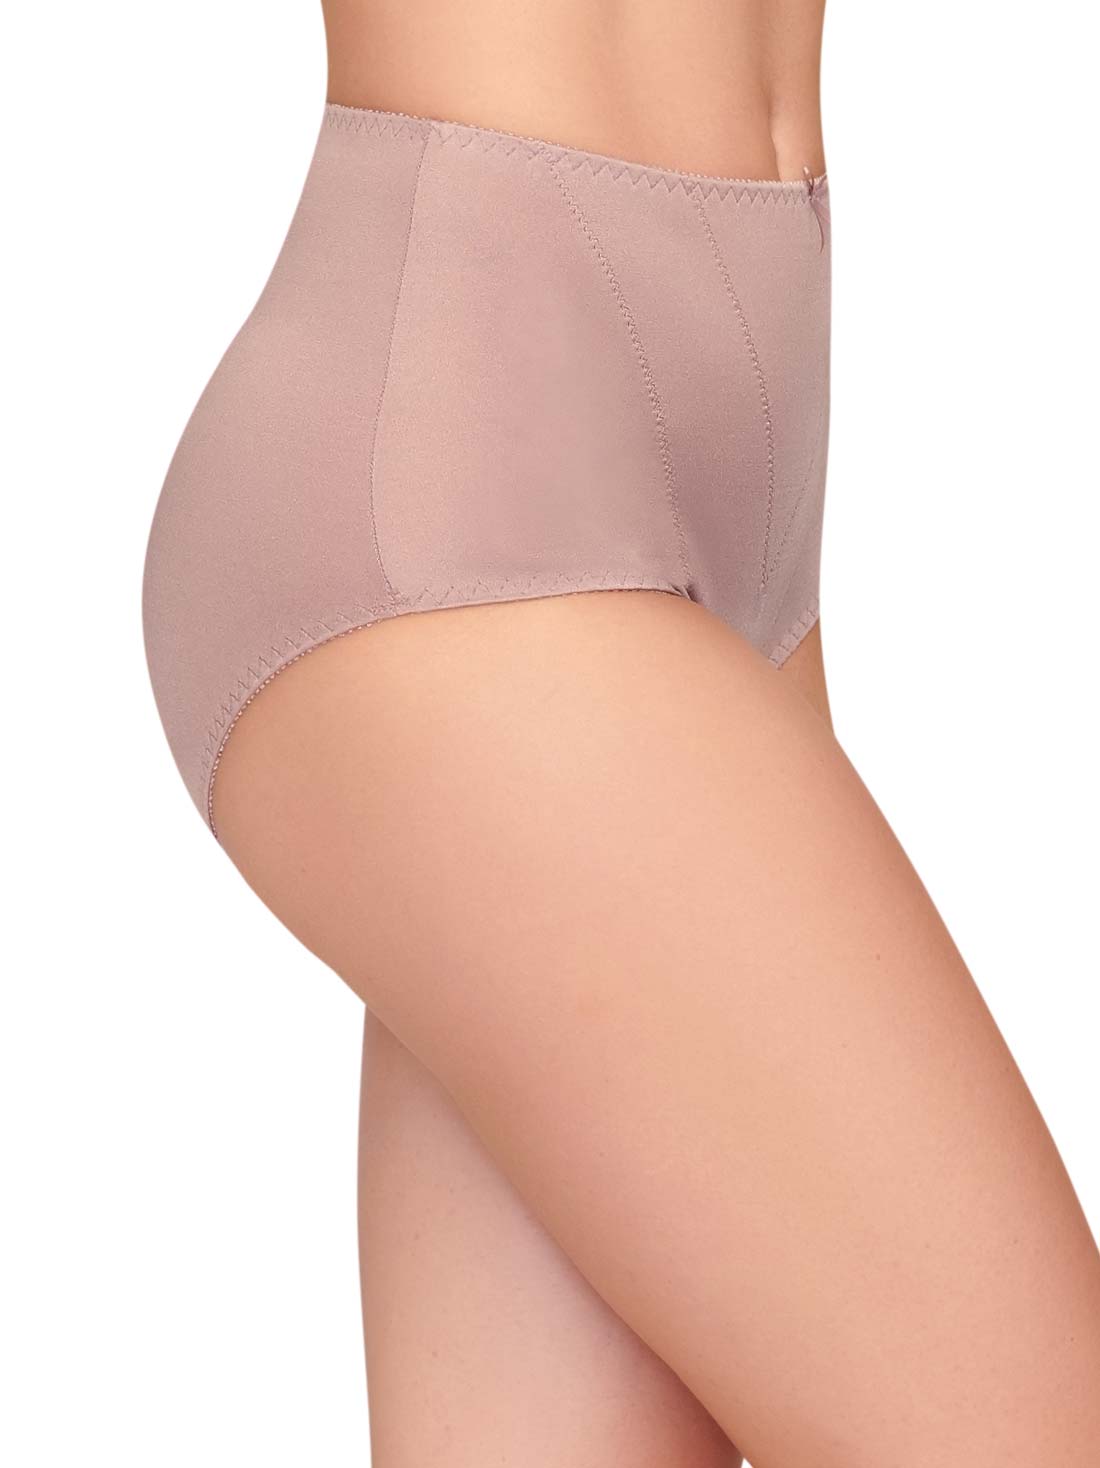 Lenz Compression Performance Underwear Underpants for women